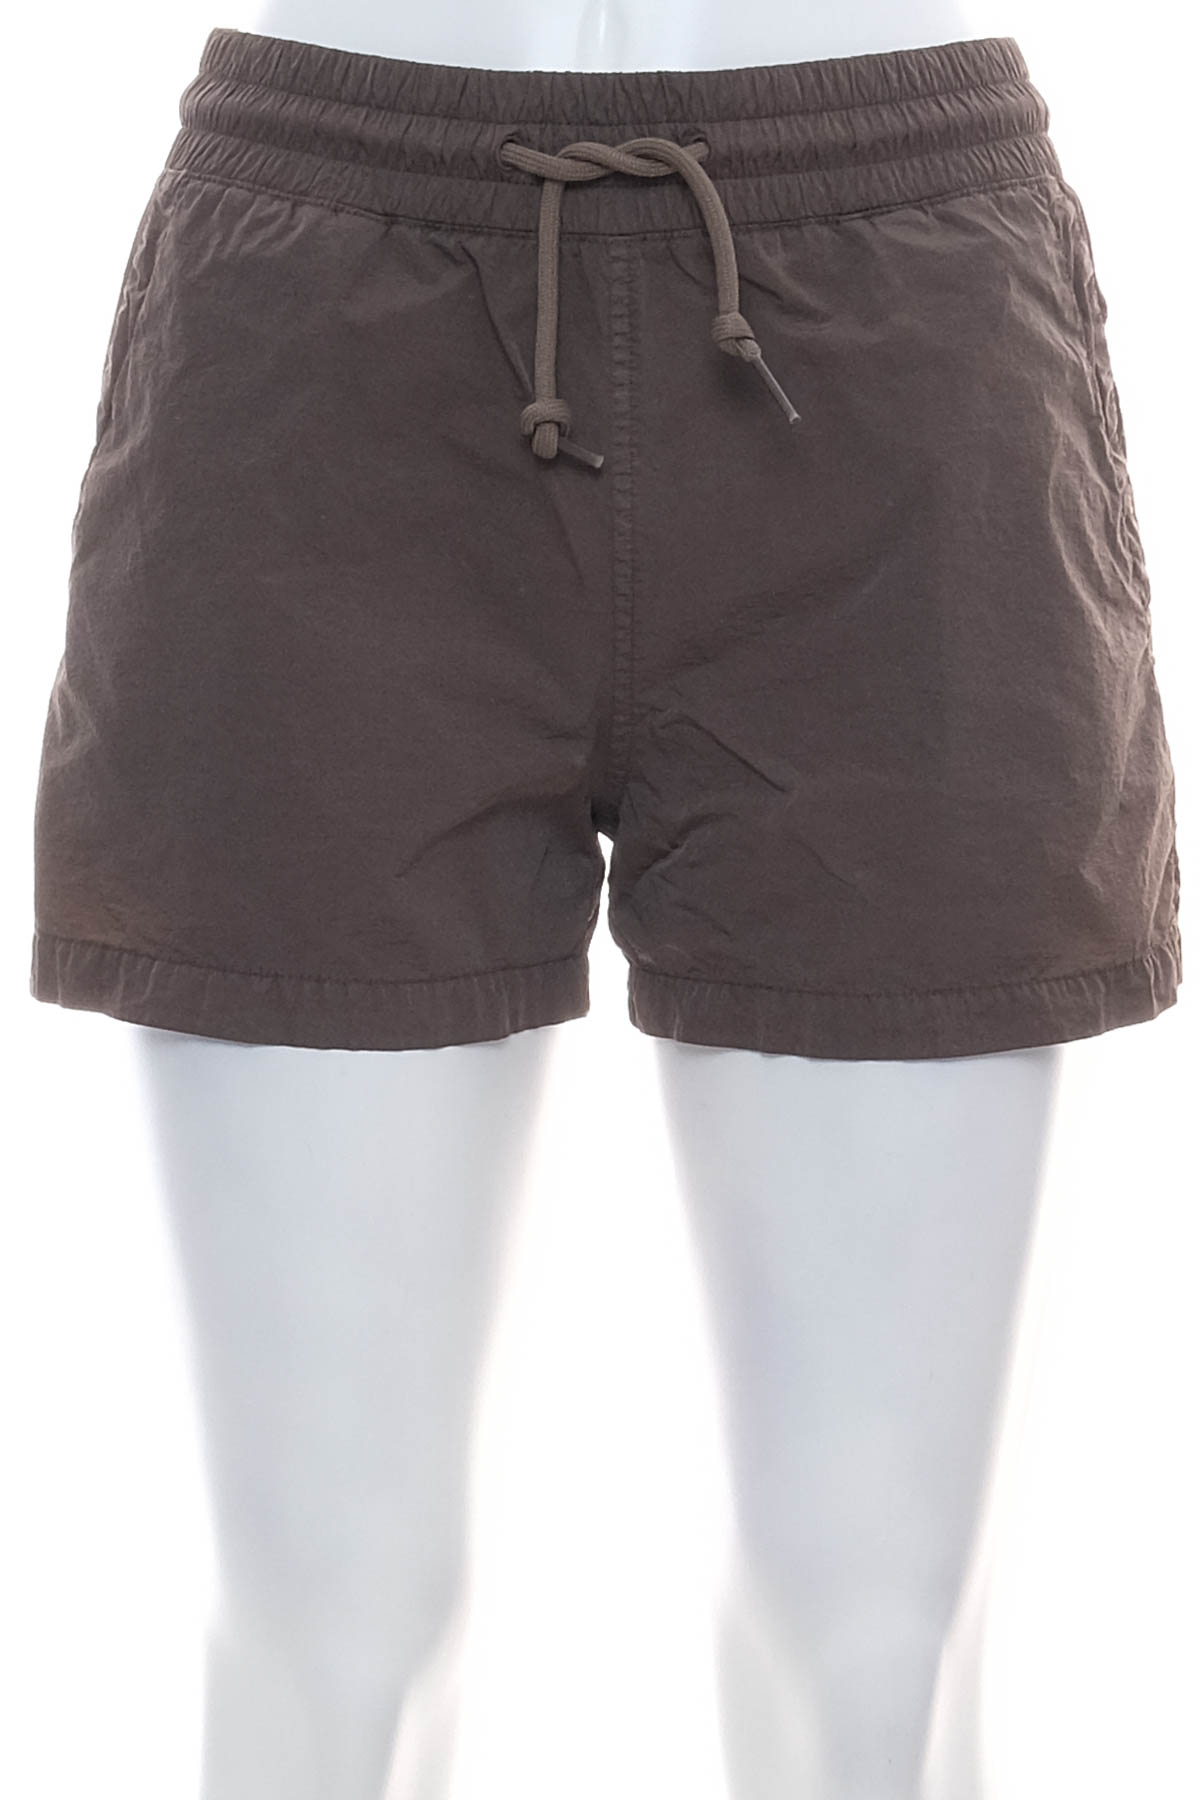 Women's shorts - Tentree - 0